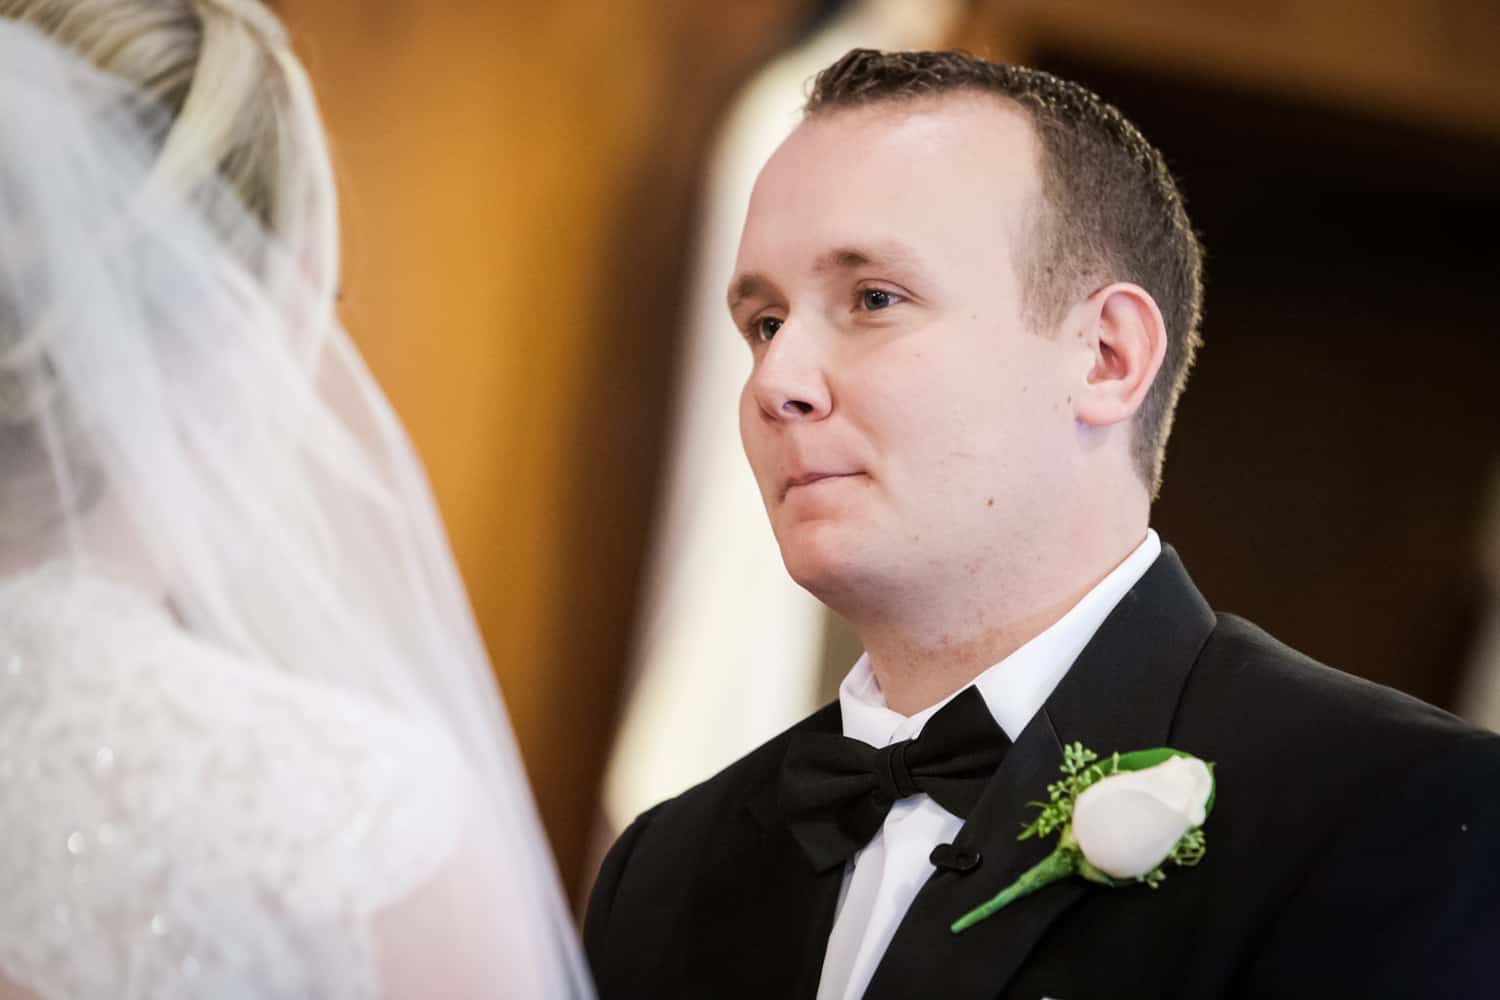 Groom looking at bride during wedding ceremony